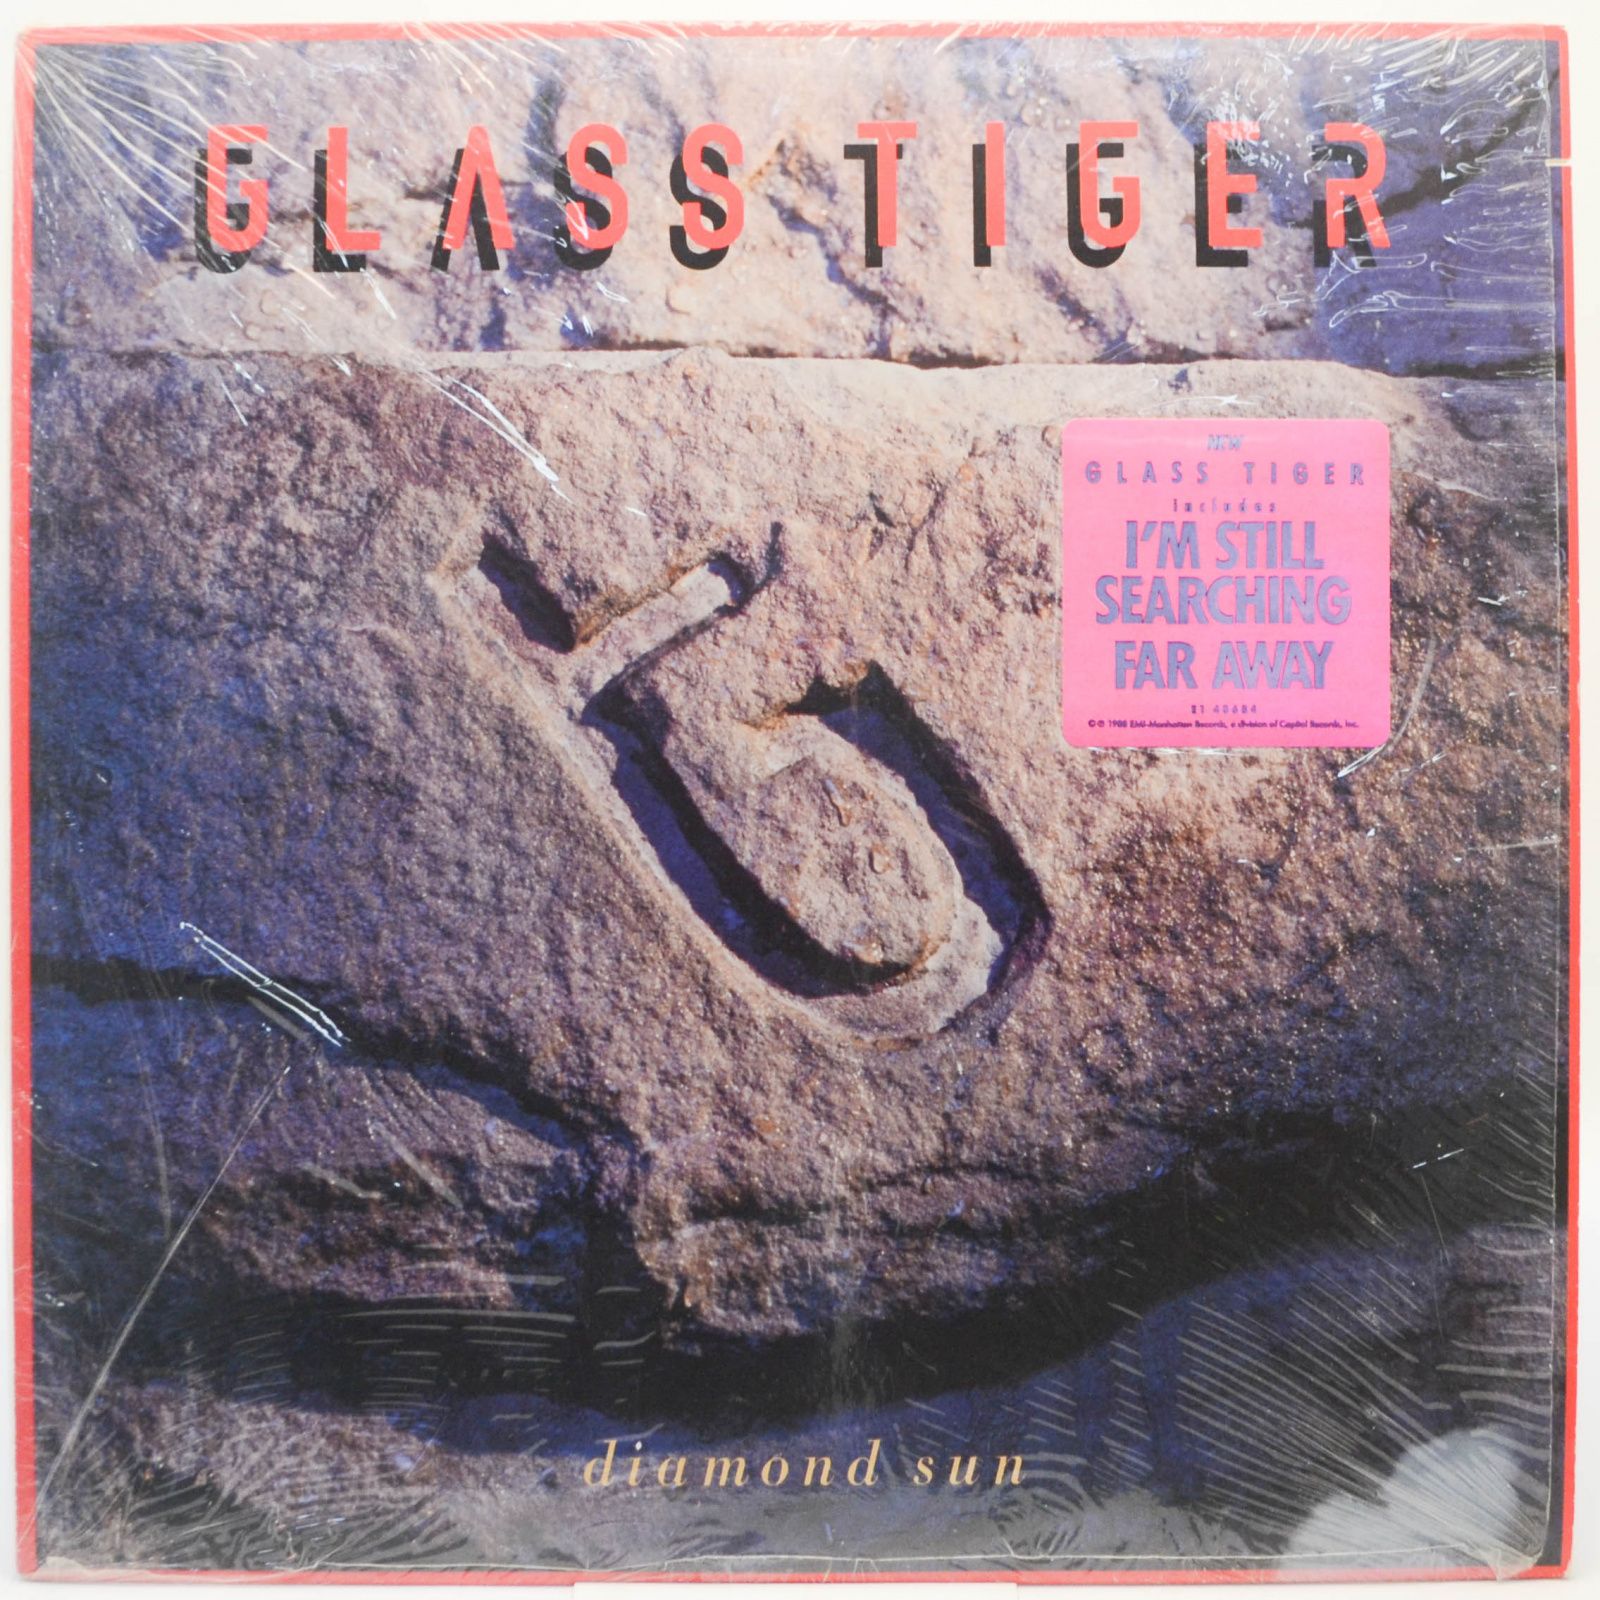 Glass Tiger — Diamond Sun, 1988